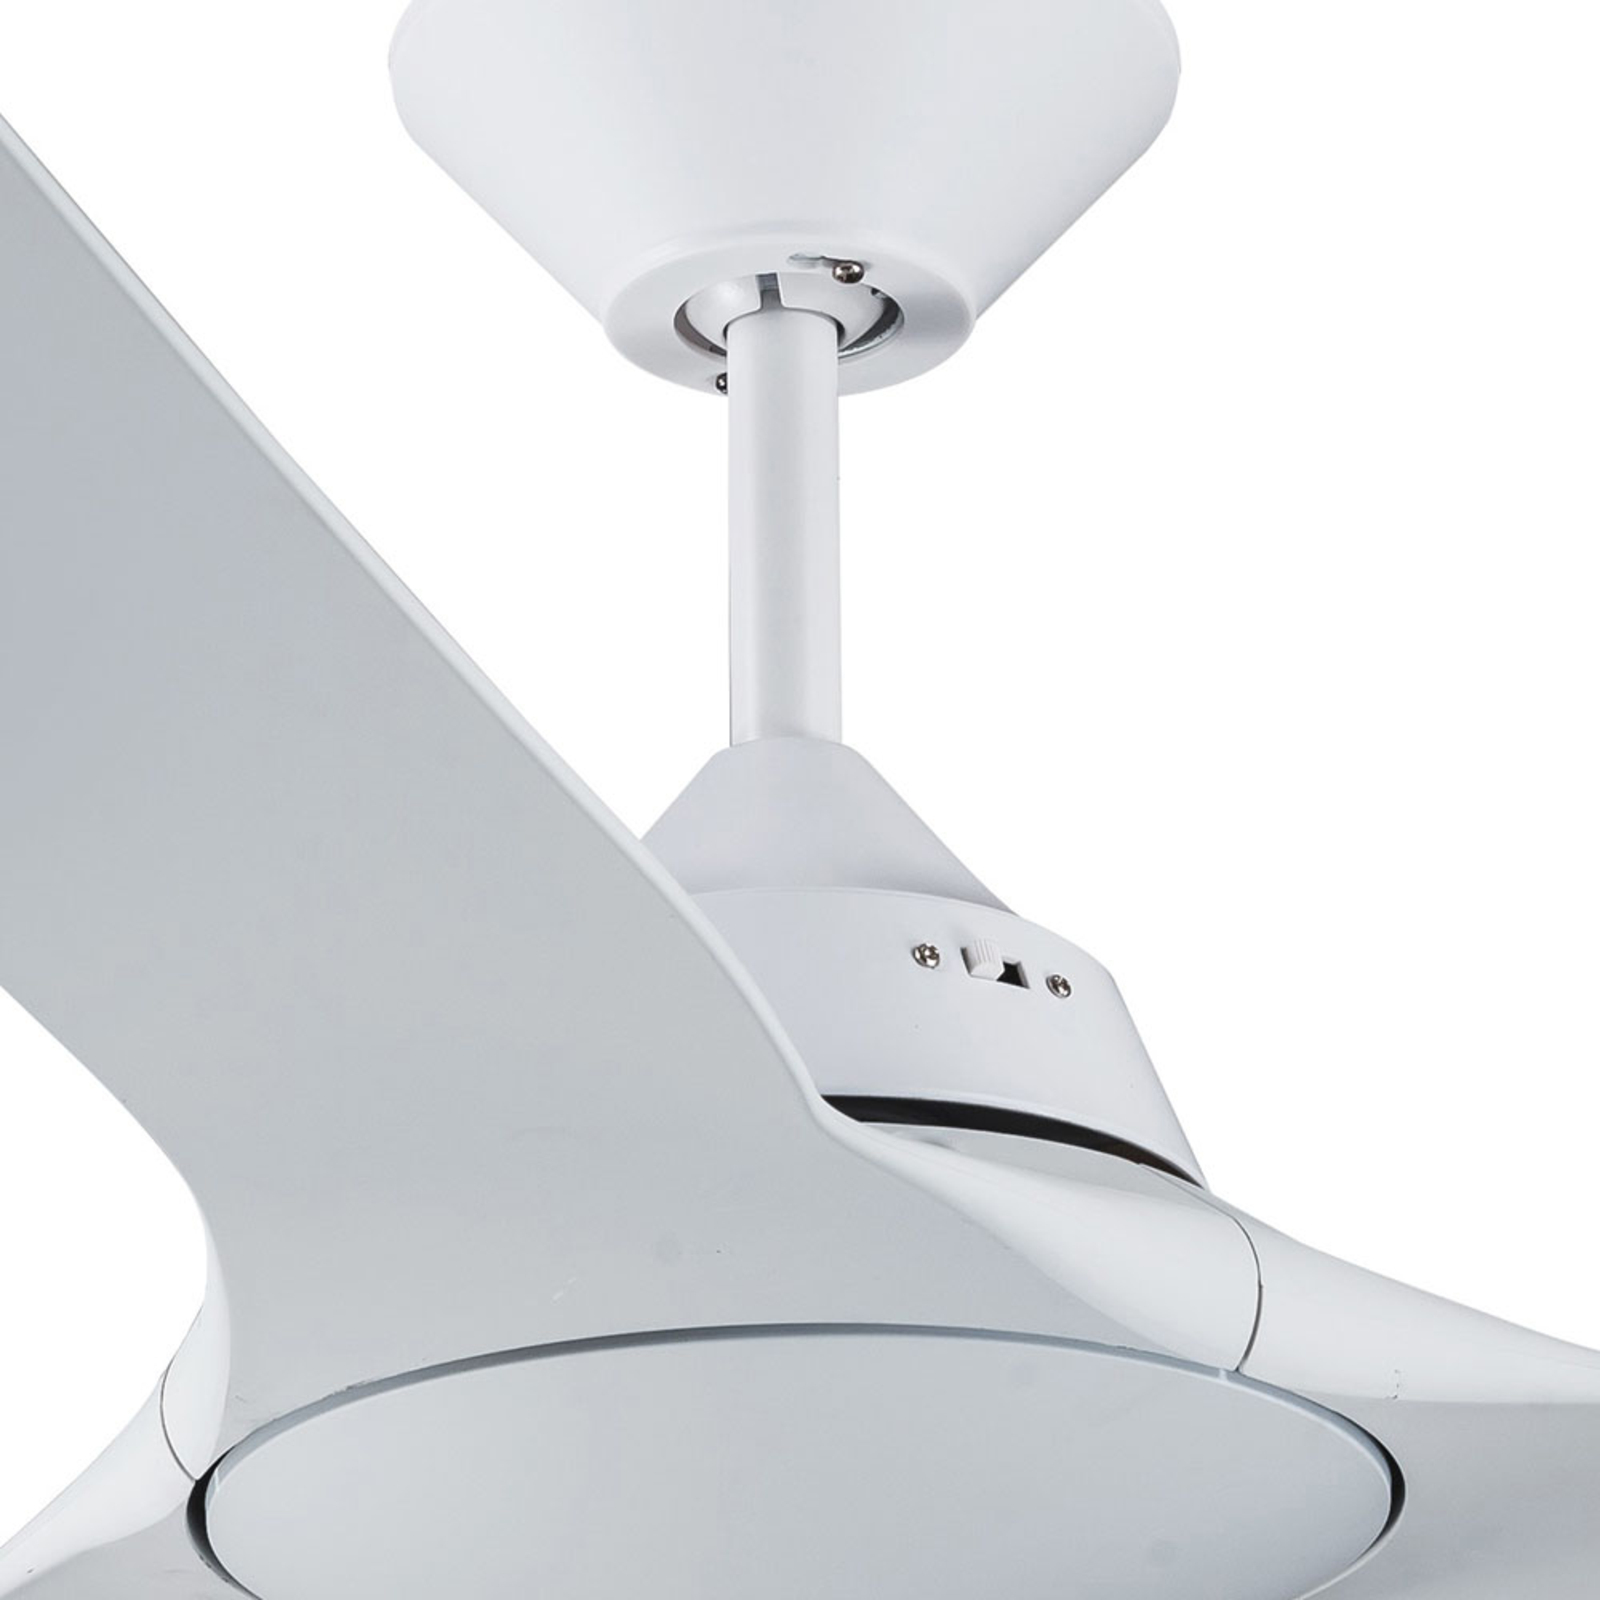 Beacon Mariner ceiling fan, white, quiet, 142 cm